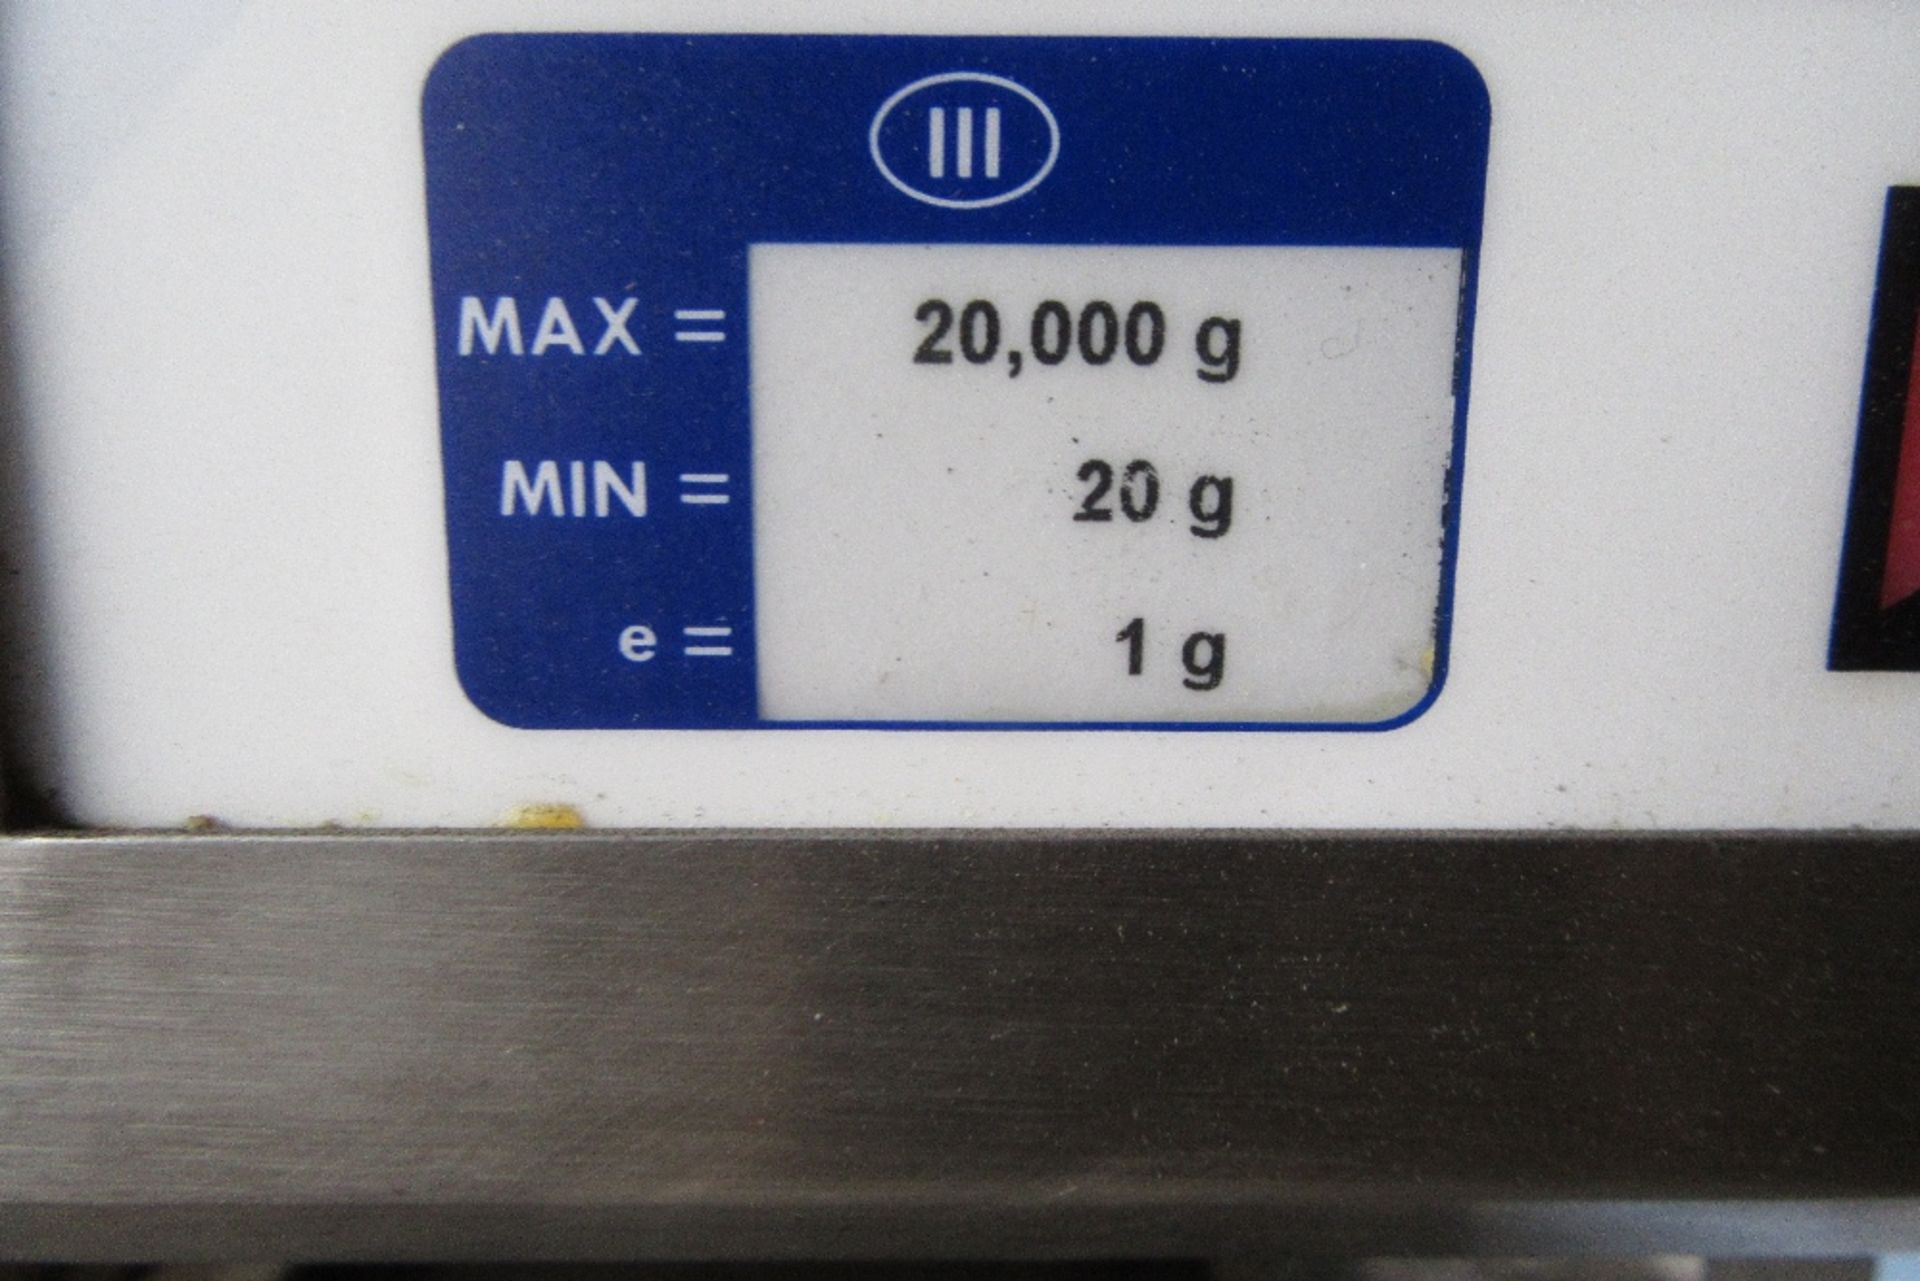 Marco Linemaster Plus Stainless Steel Digital Platform Scale, Capacity: 20 - 20000g x 1g - Image 4 of 4